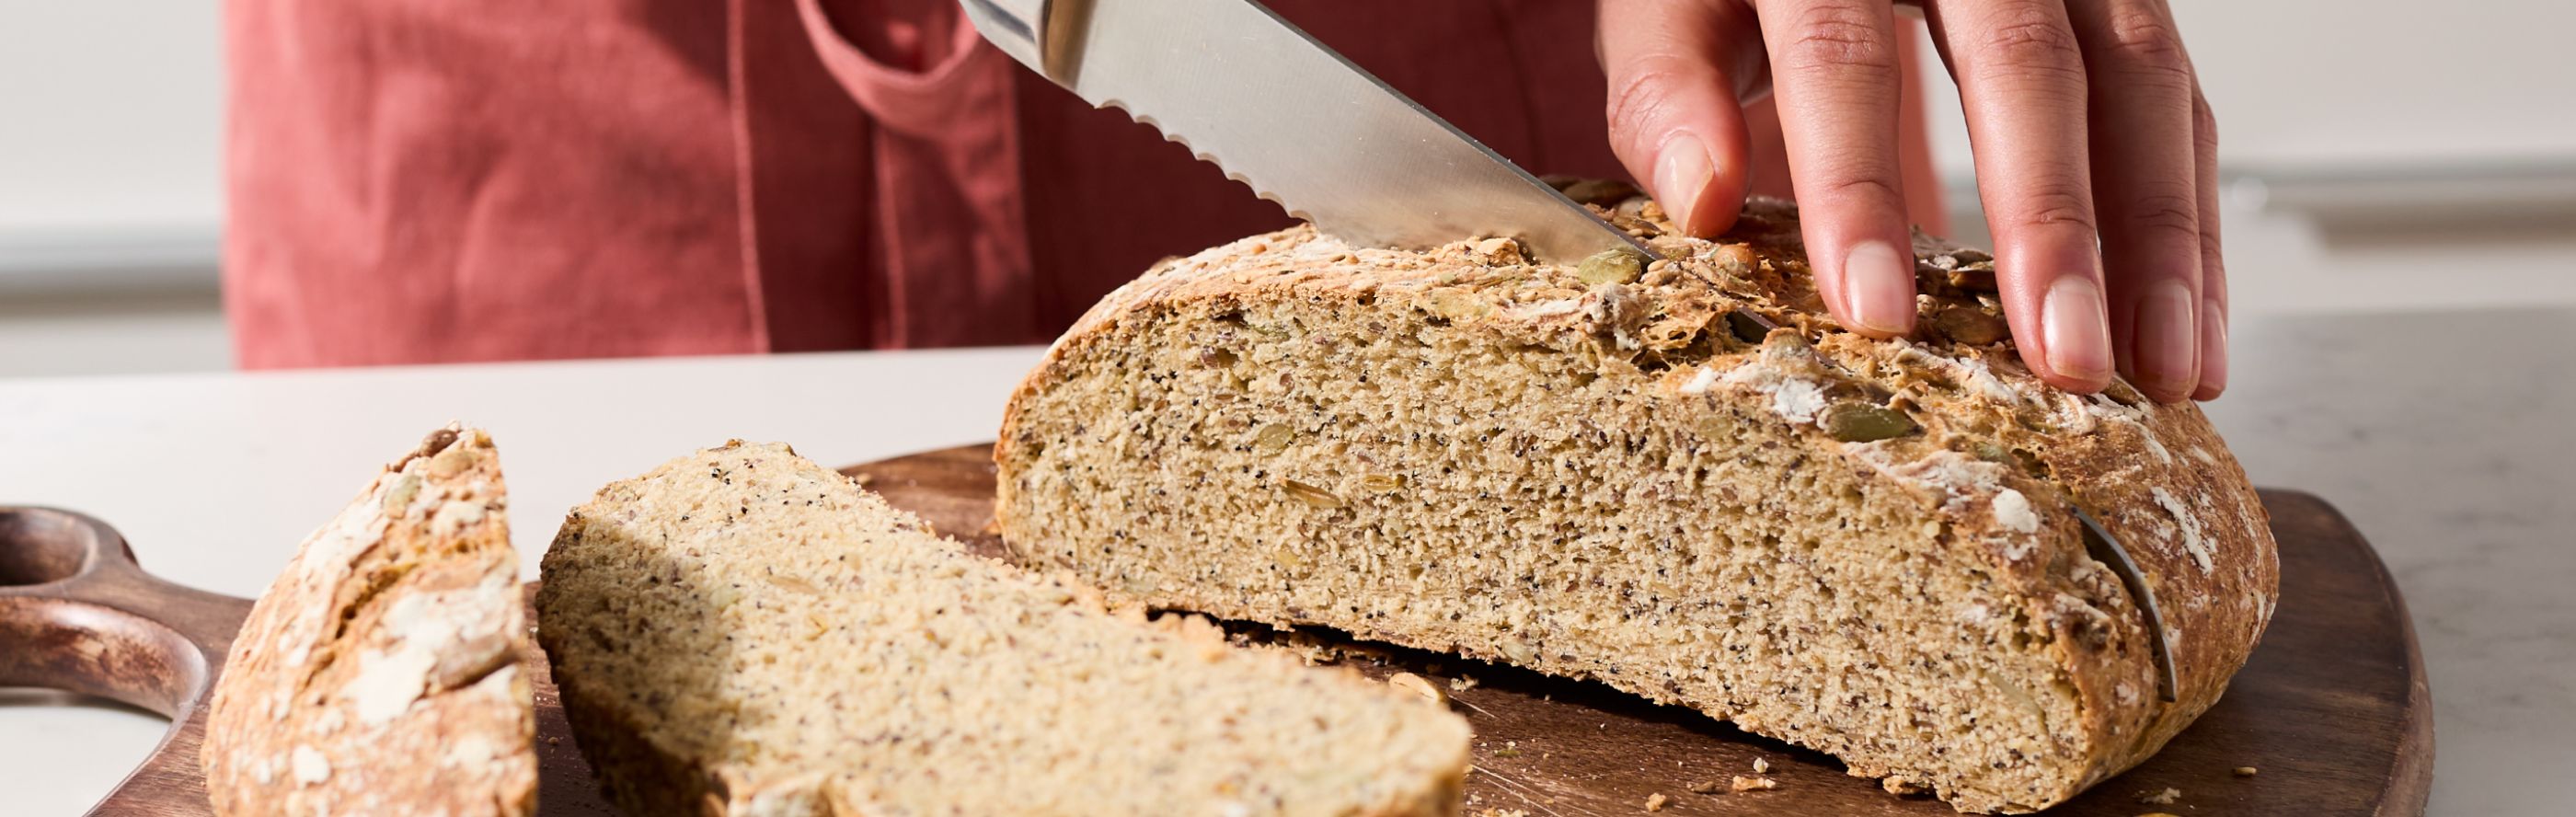 Cutting a homemade seed bread